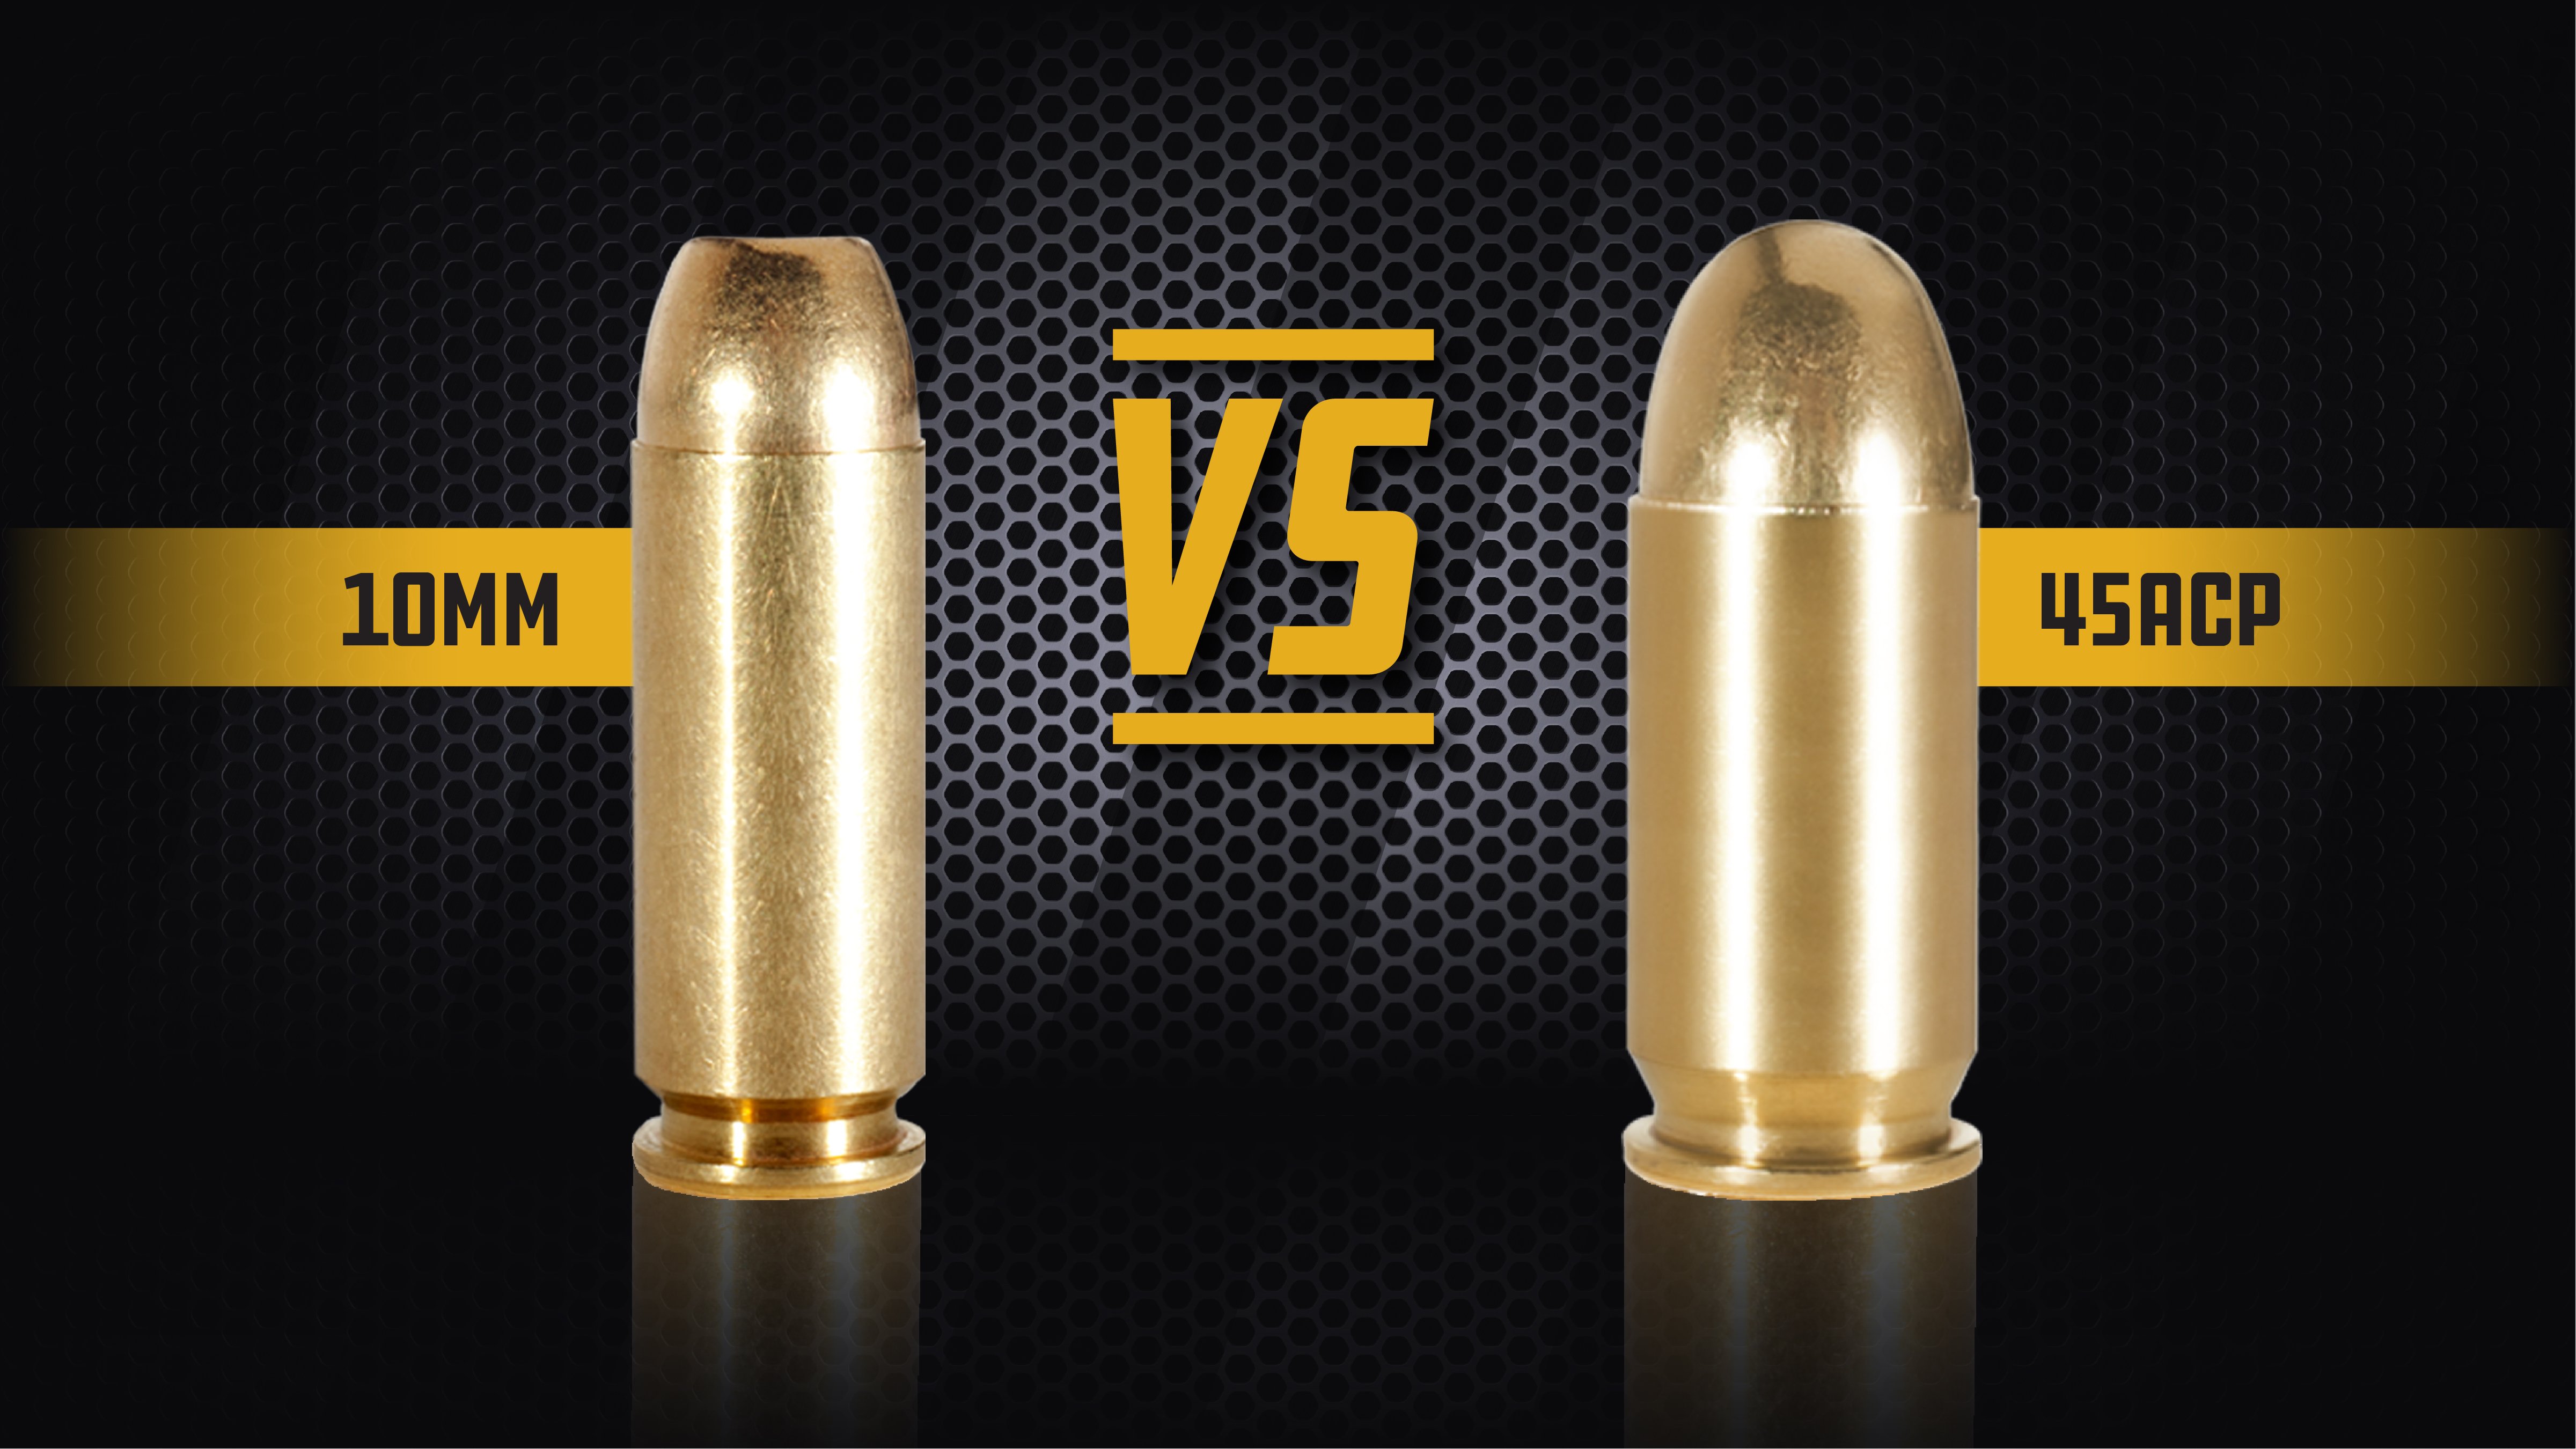 Ballistics Showdown: Comparing the Power of 10MM vs 45 ACP